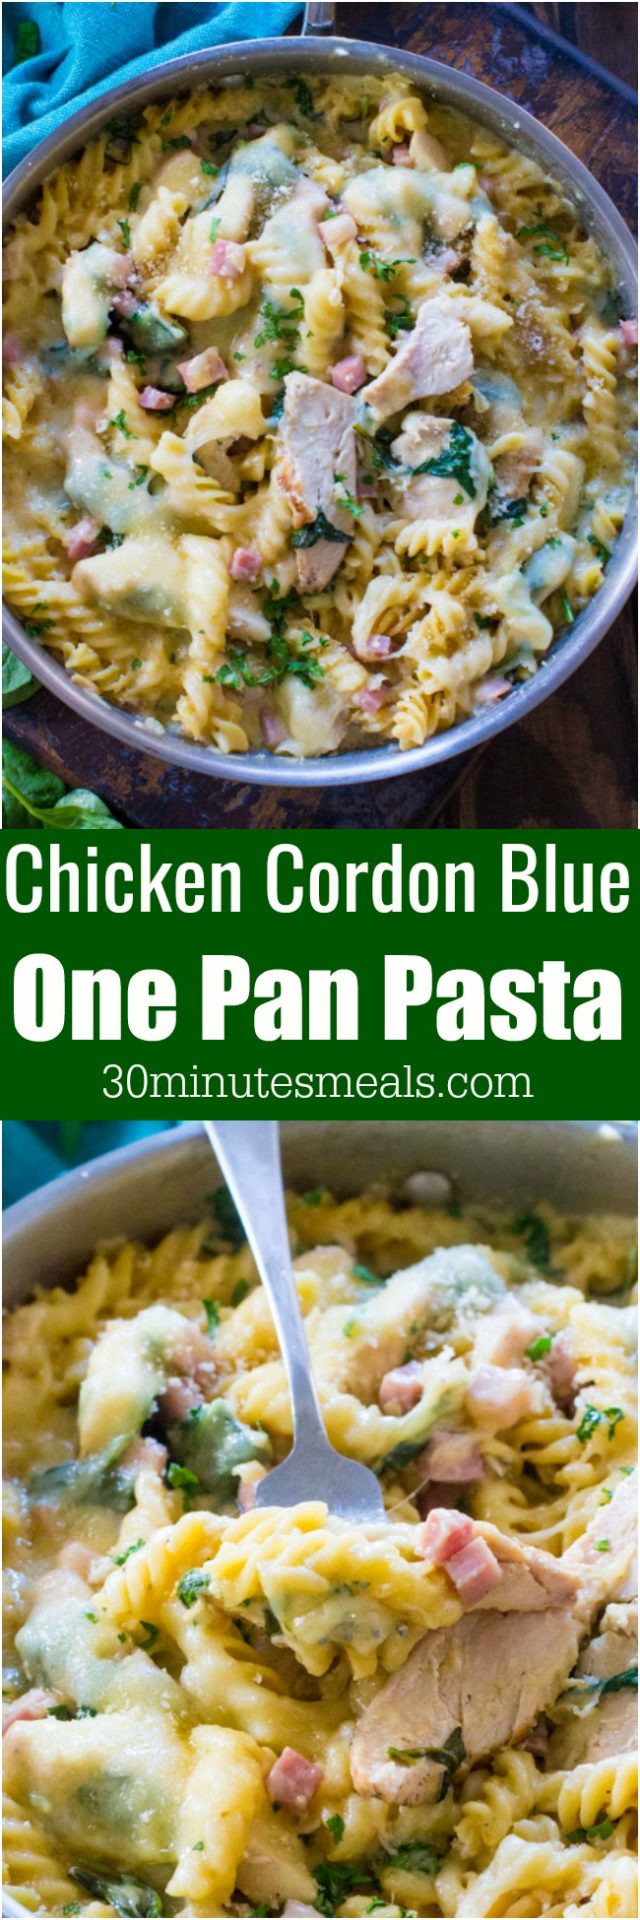 CHICKEN CORDON BLEU PASTA - ONE PAN - 30 minutes meals